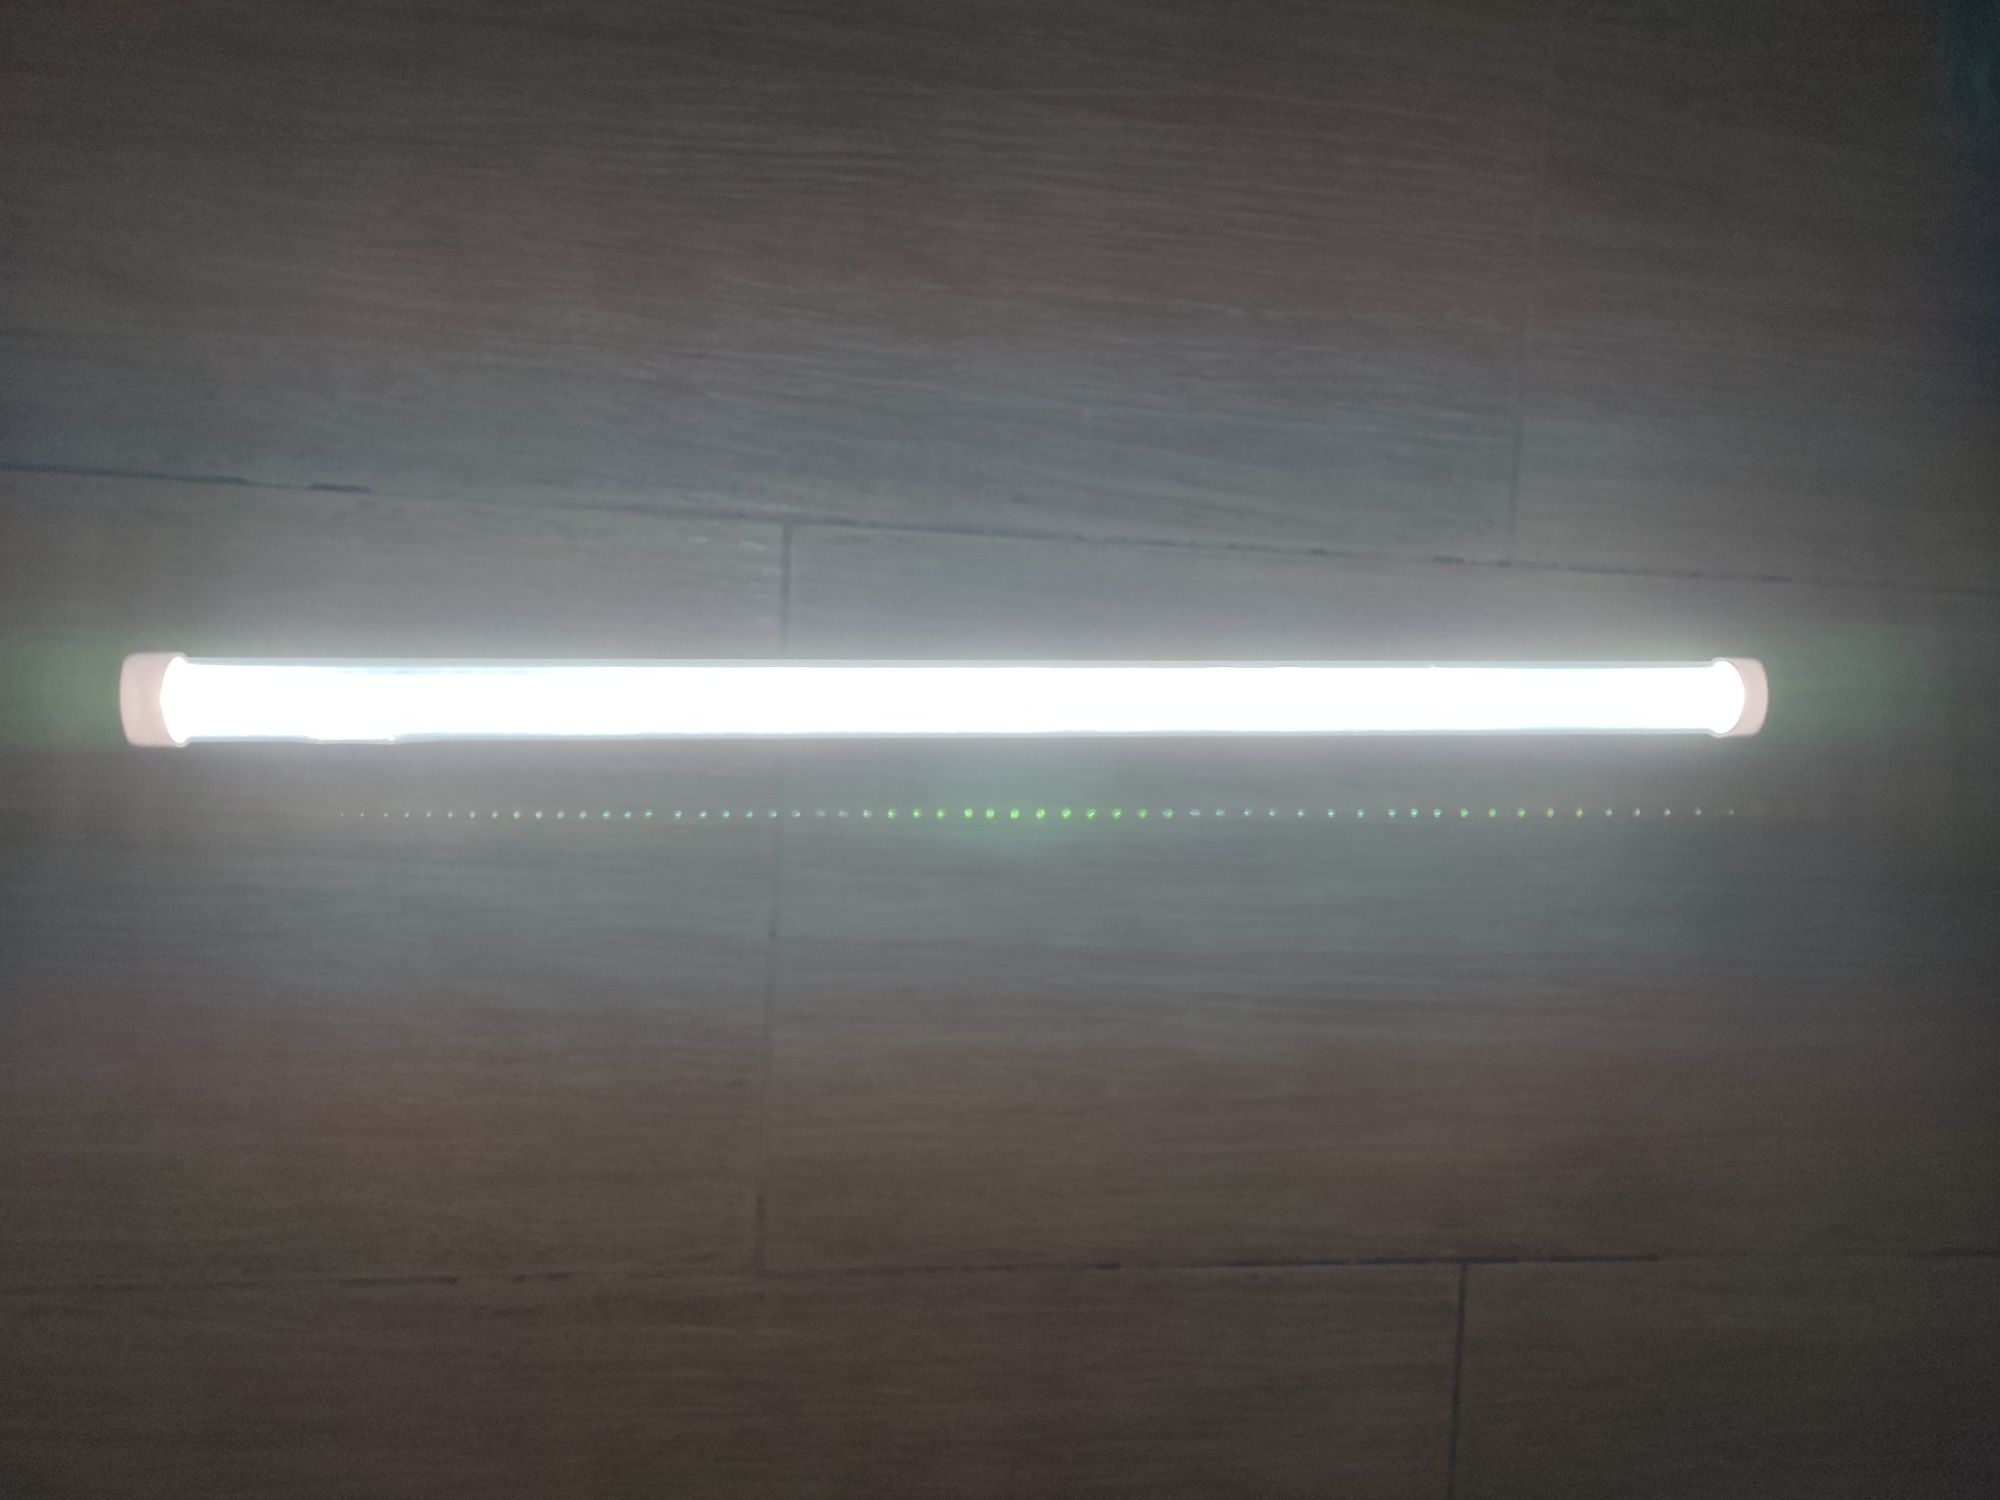 Автономная лампа Logic Power LP-1307R LA с аккумулятором. 60 ярких LED